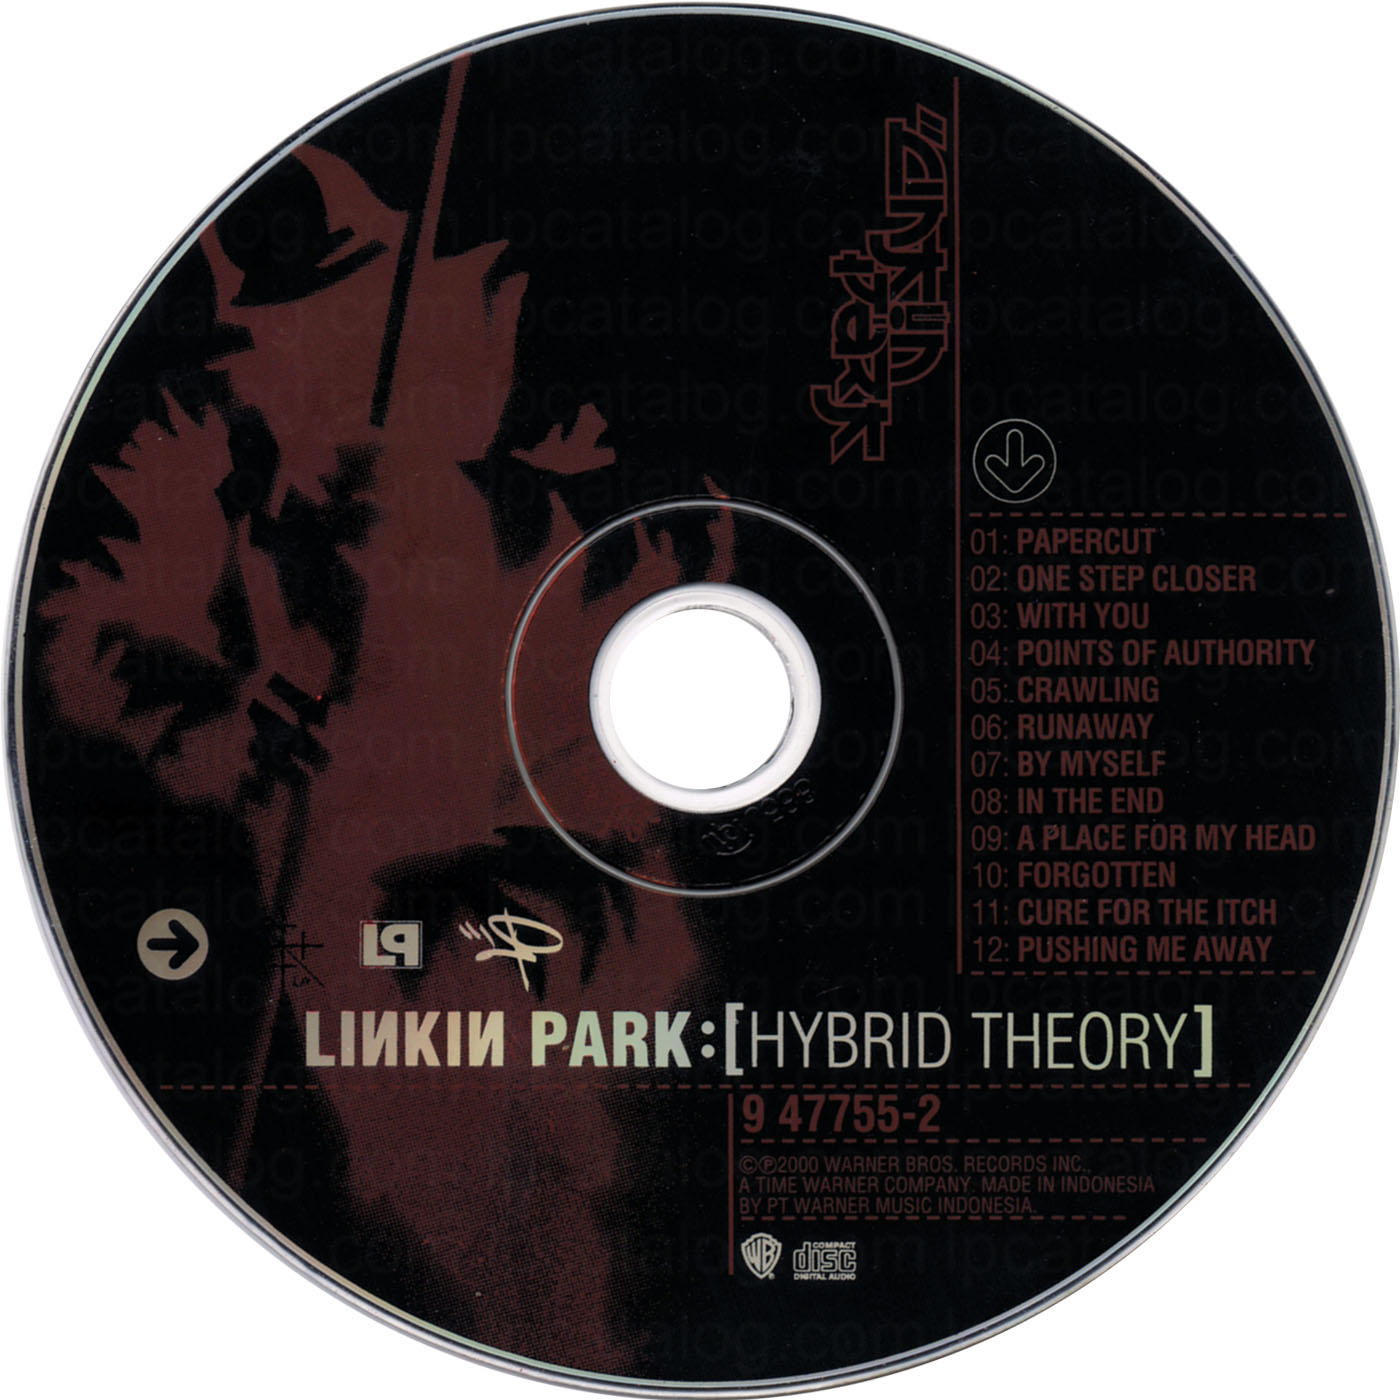 LPCatalog - 2000 Hybrid Theory / CD / Indonesia, 9 47755-2